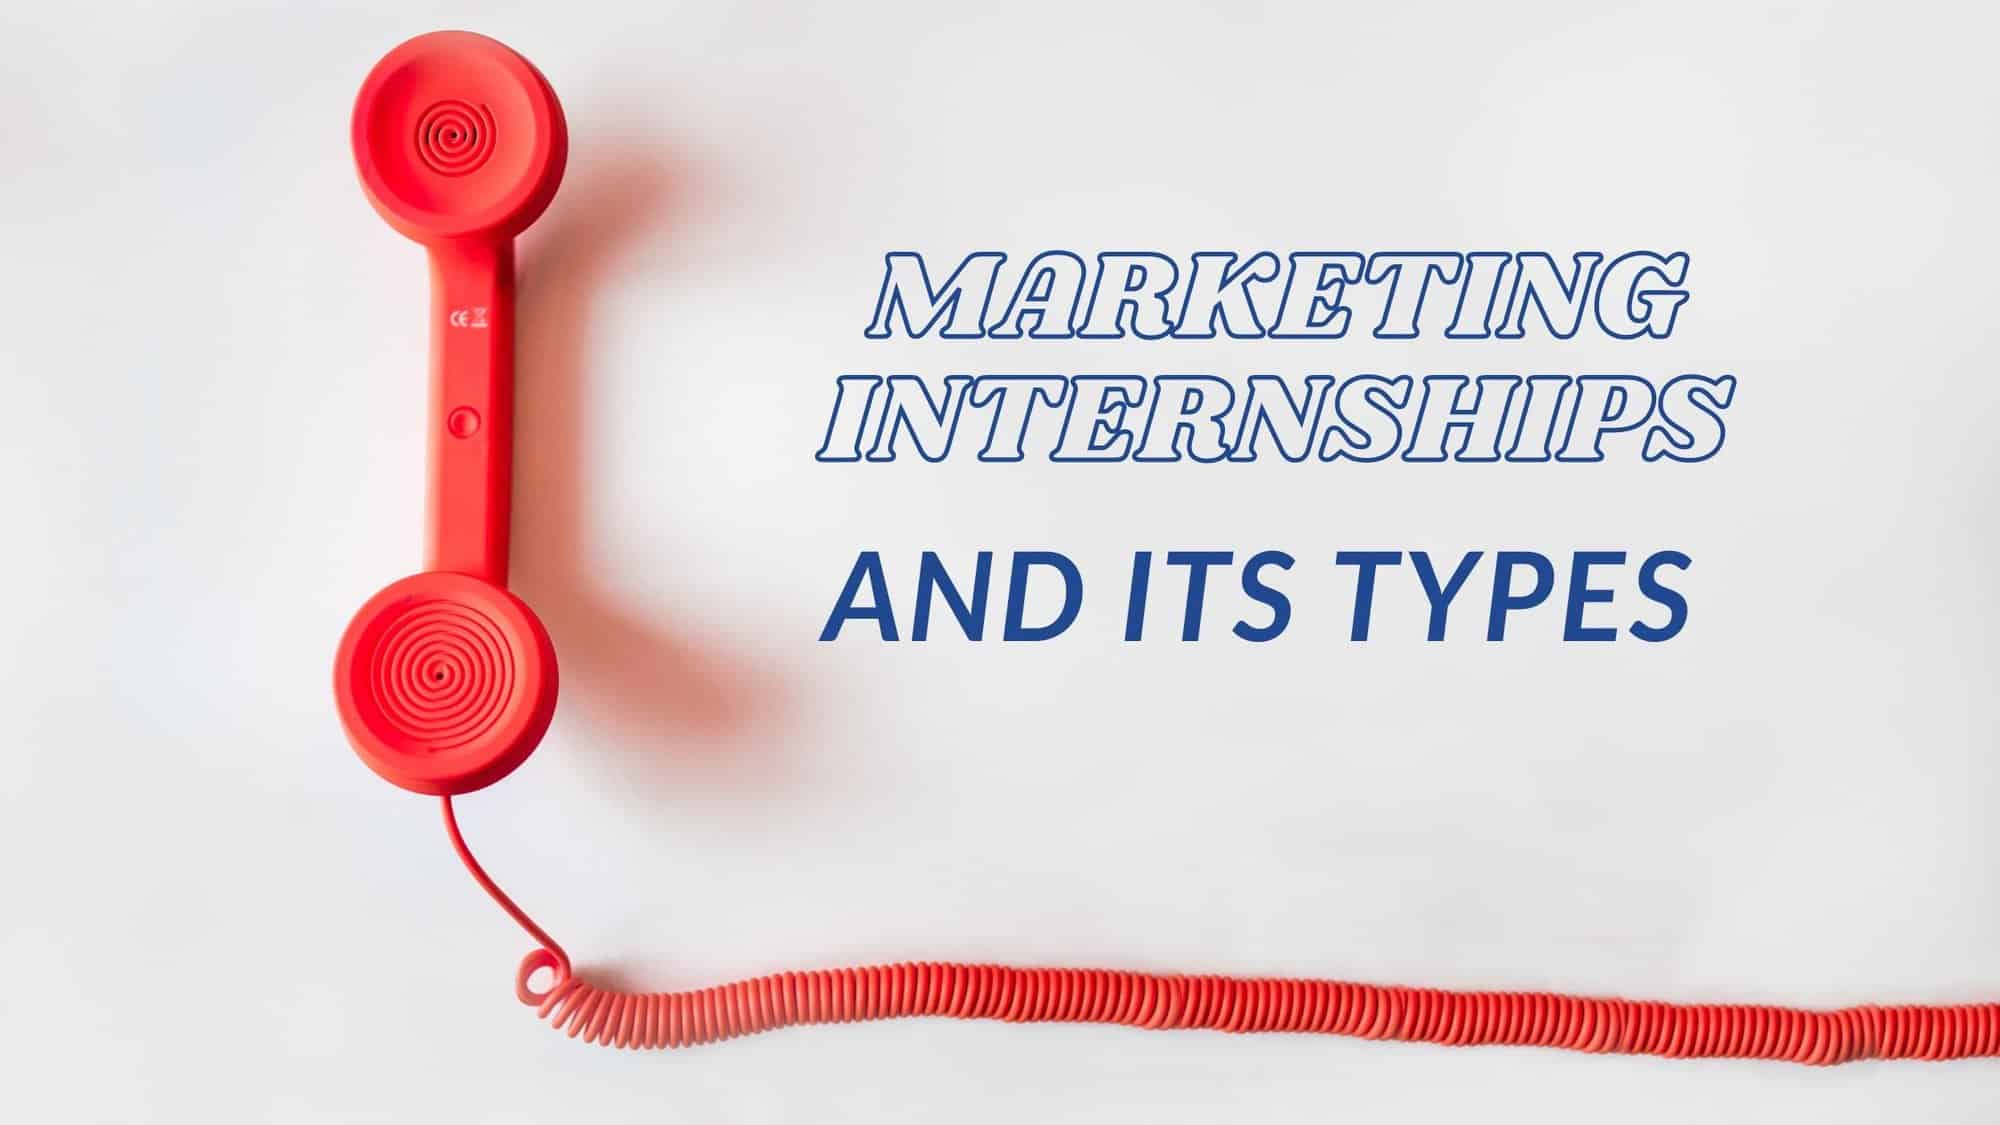 Marketing Internships and its types